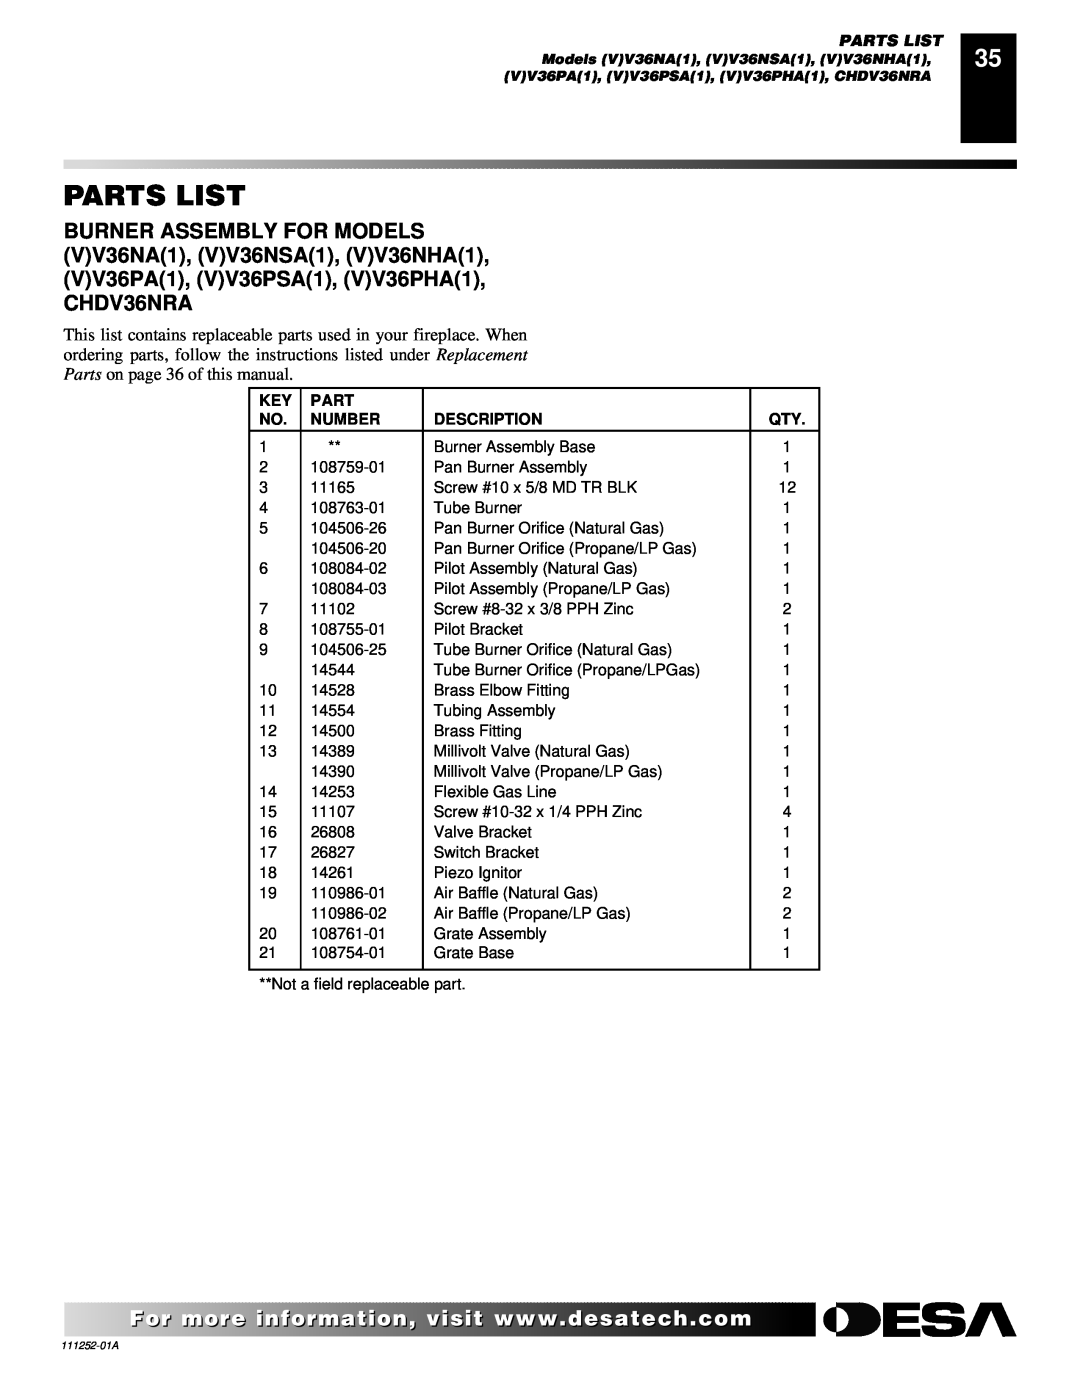 Desa CHDV36NRA installation manual Parts List, Number, Description 